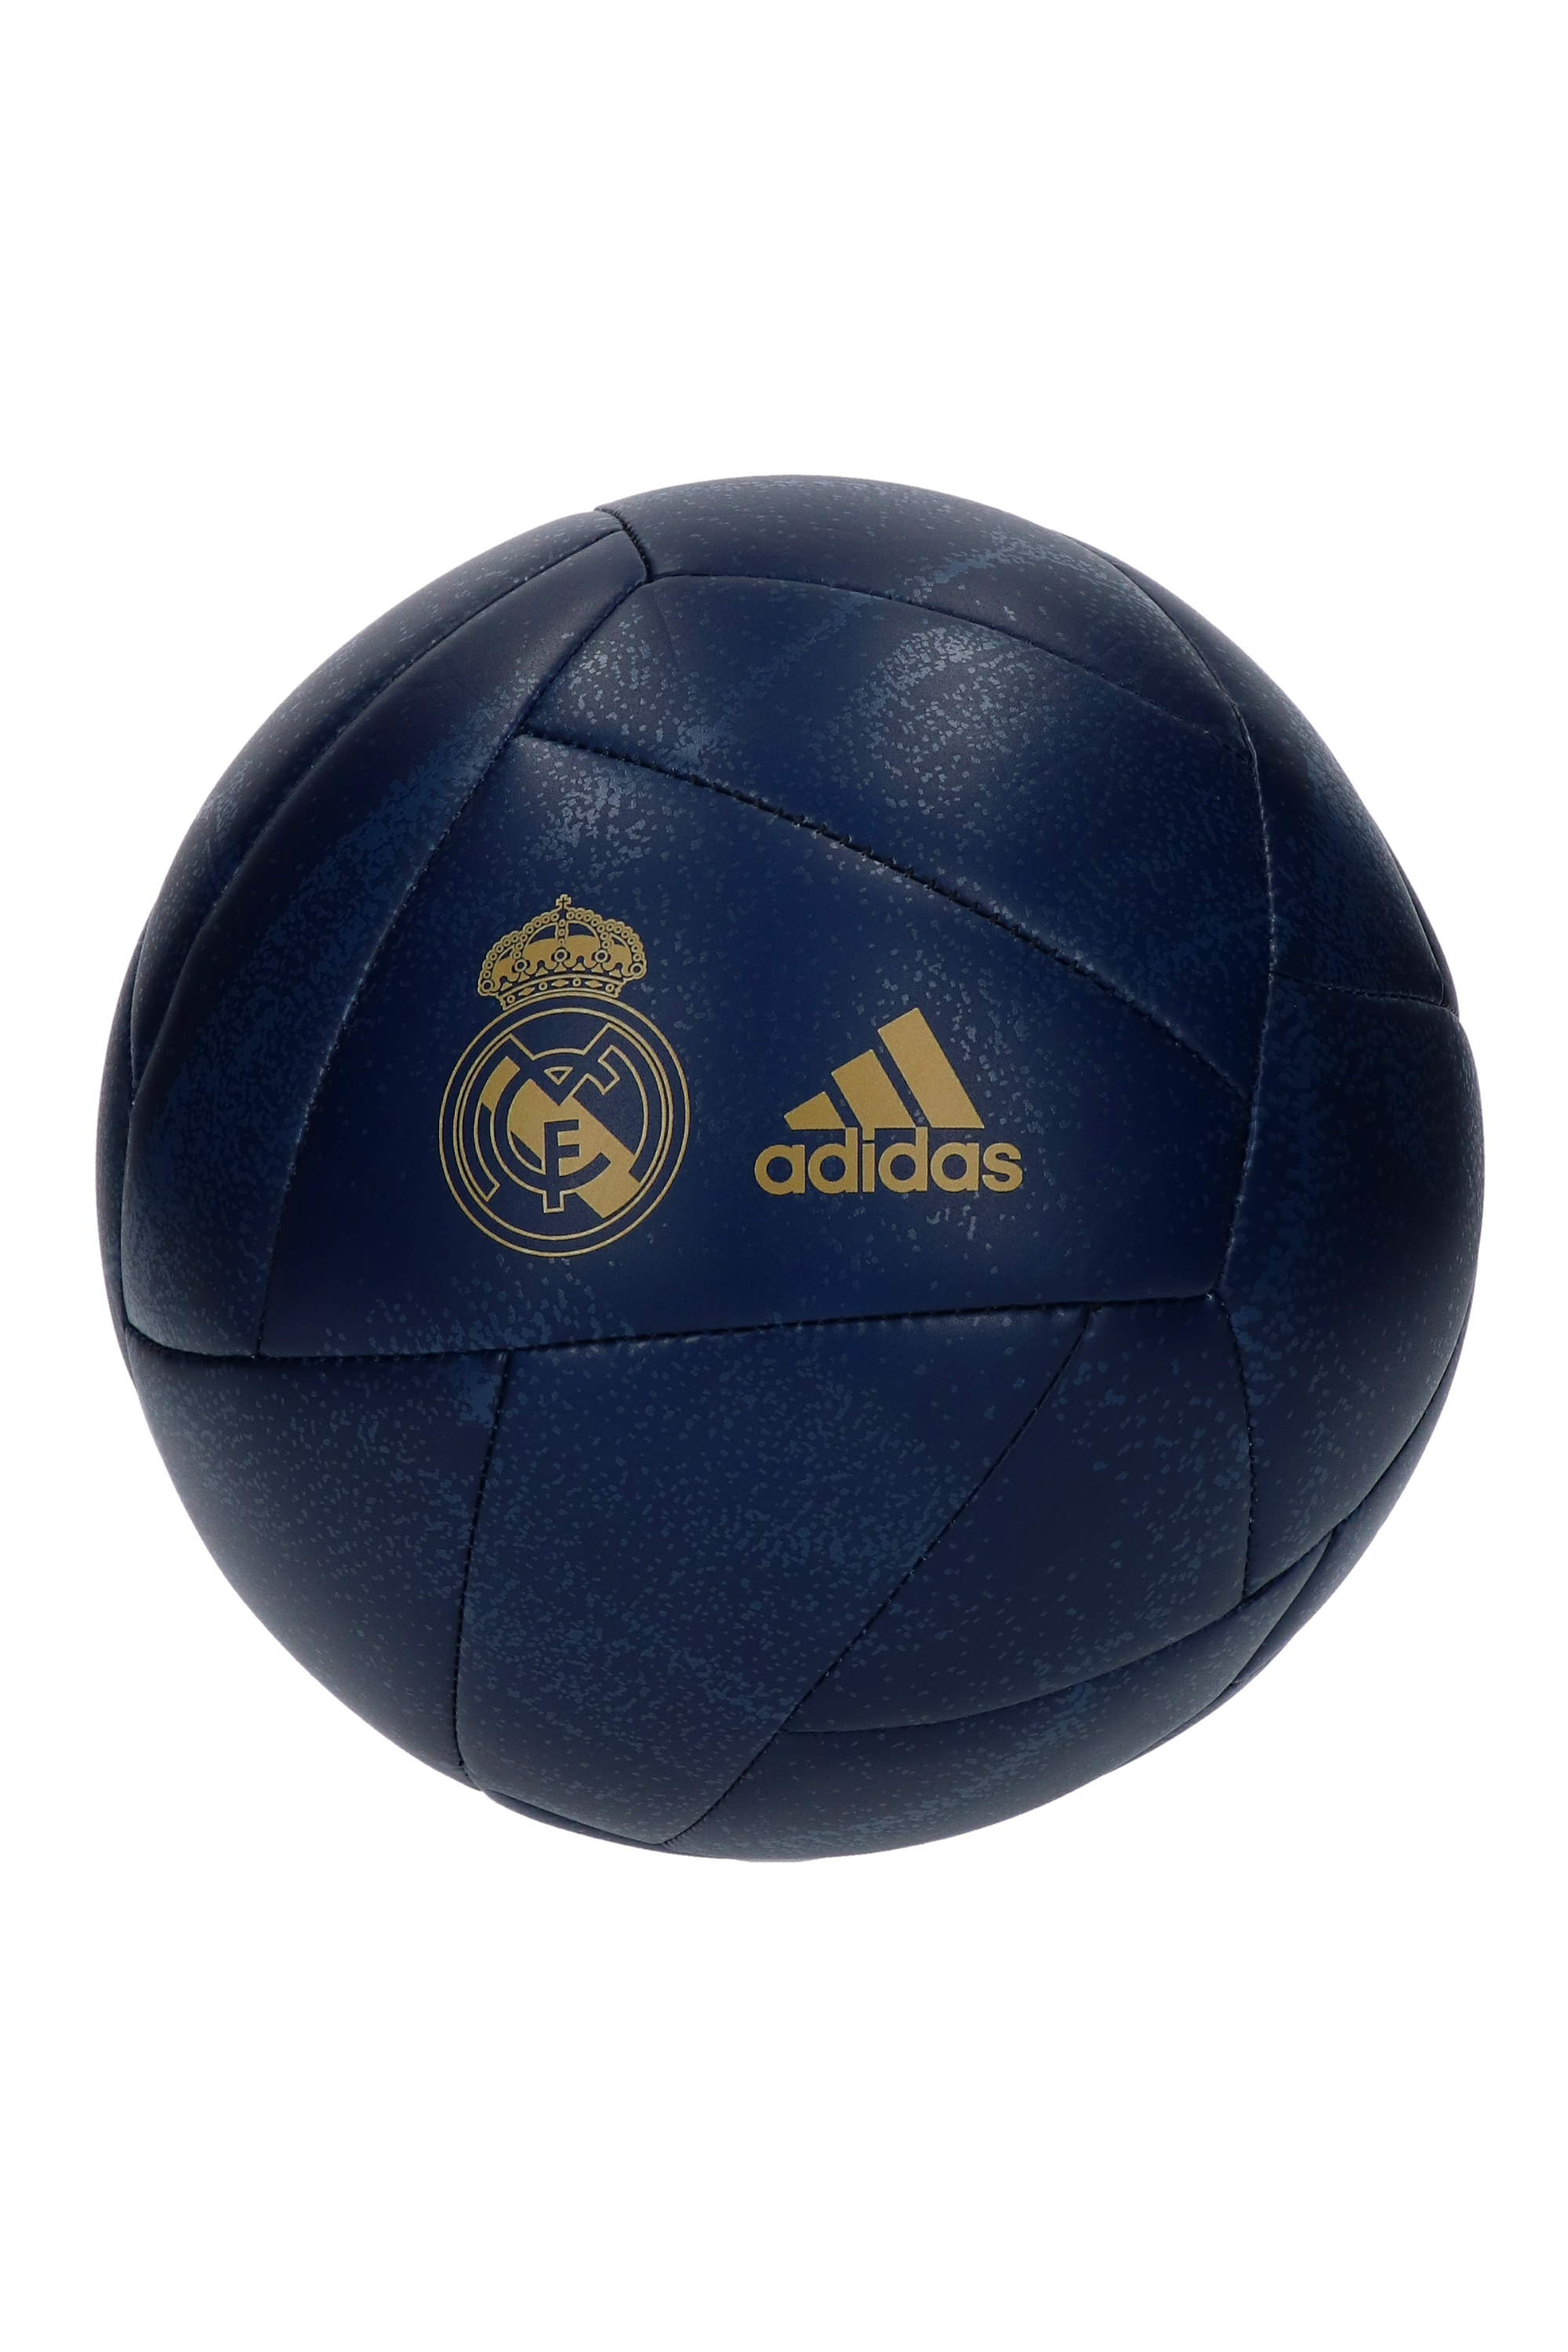 Ball adidas Real Madrid Capitano size 4 